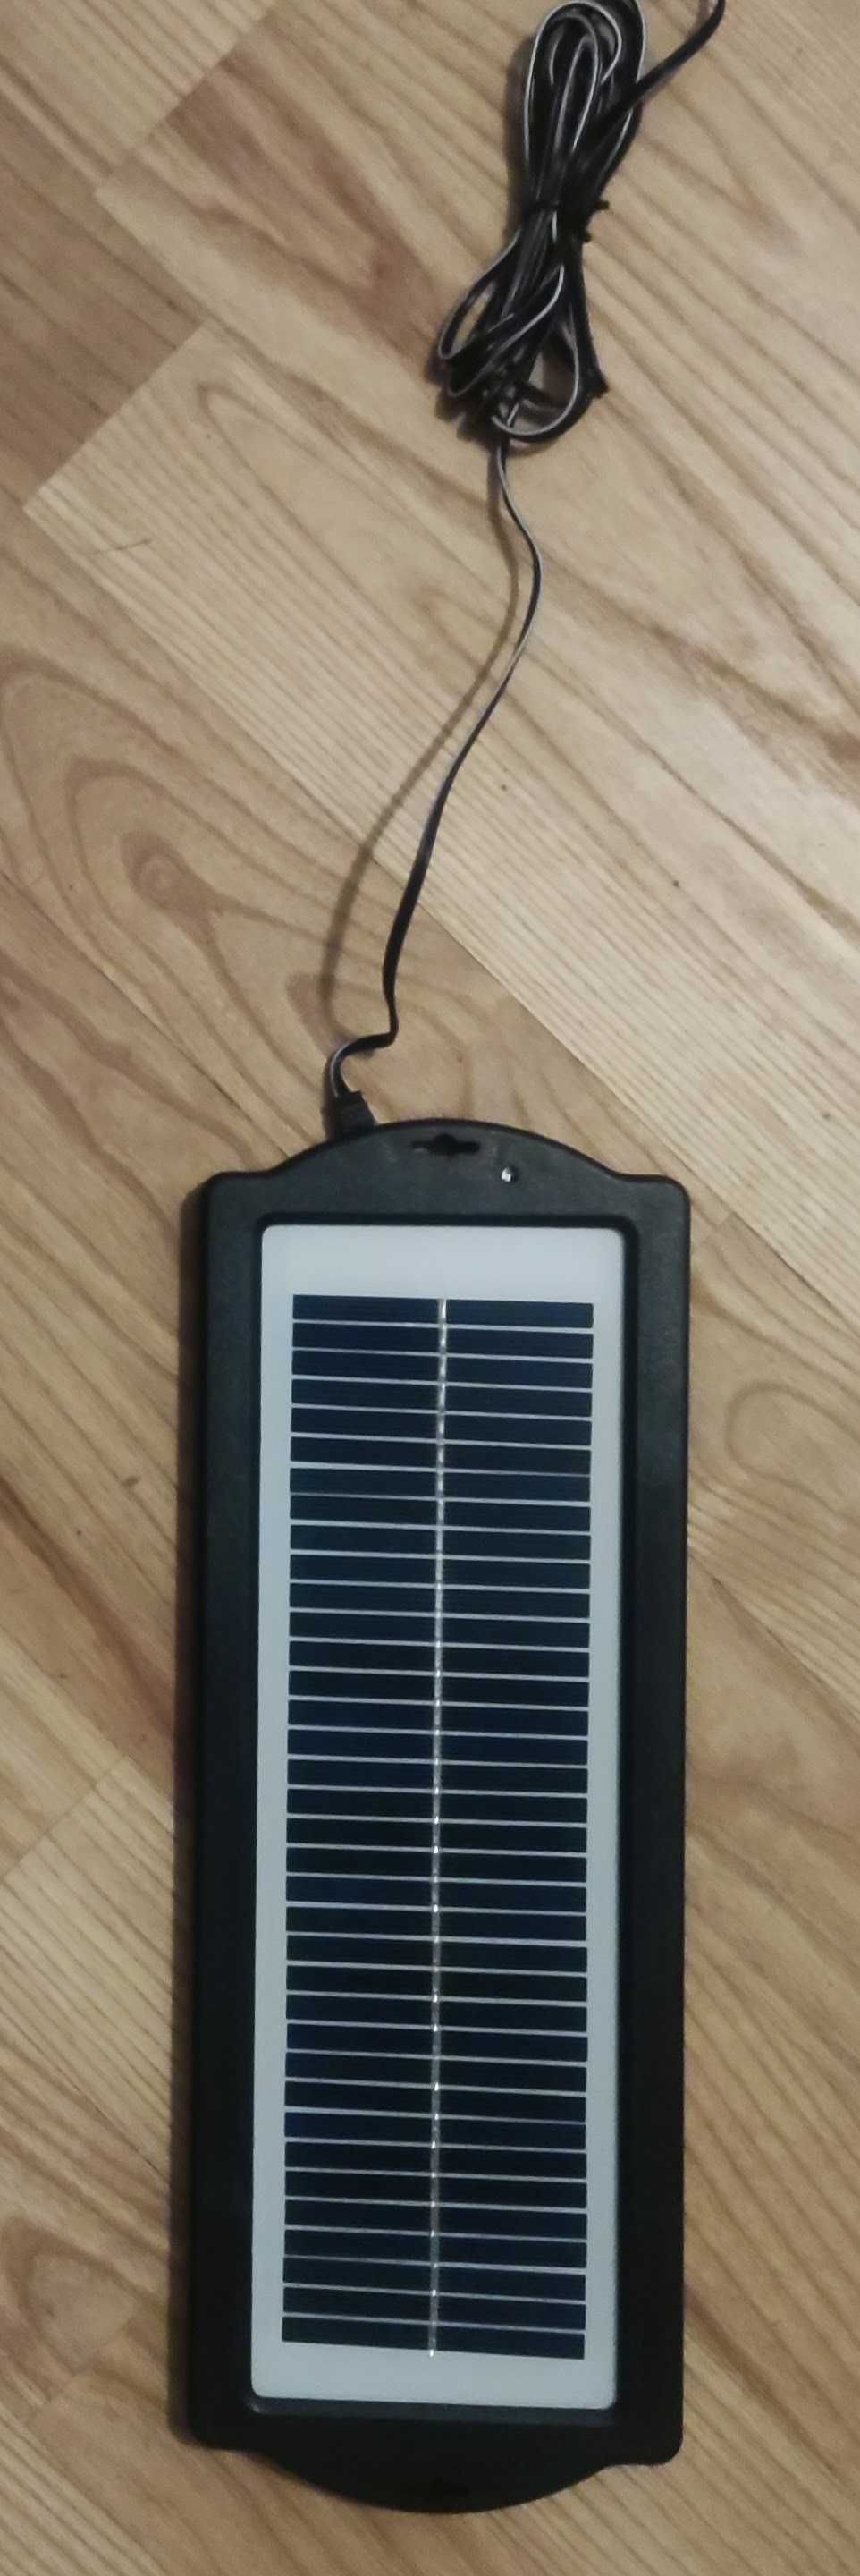 Panel solarny bateria słoneczna